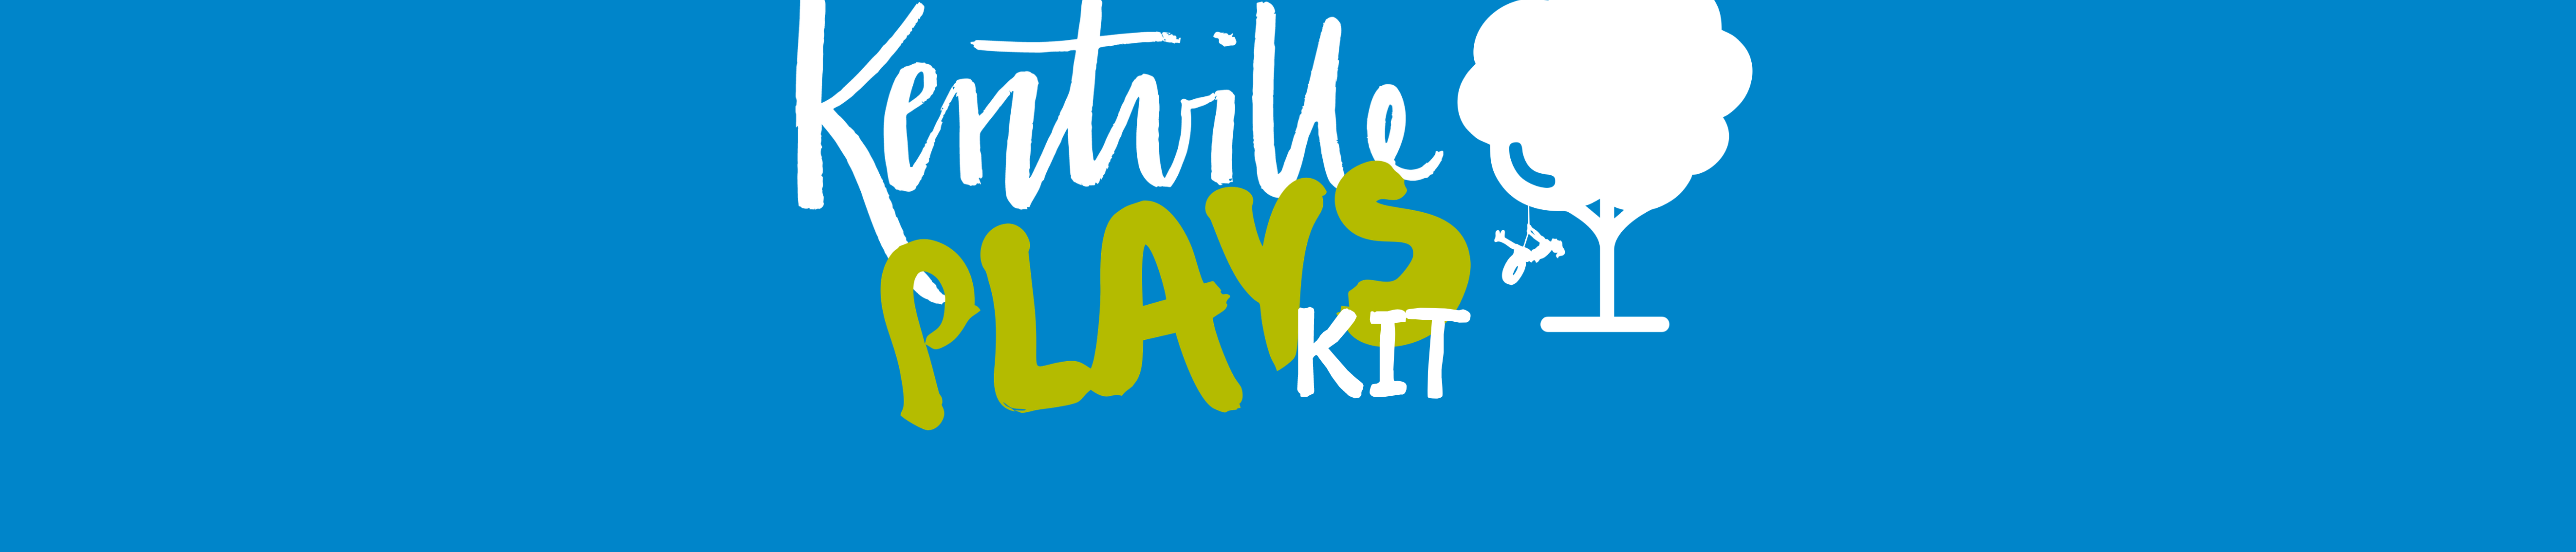 Kentville Plays Leisure Kits